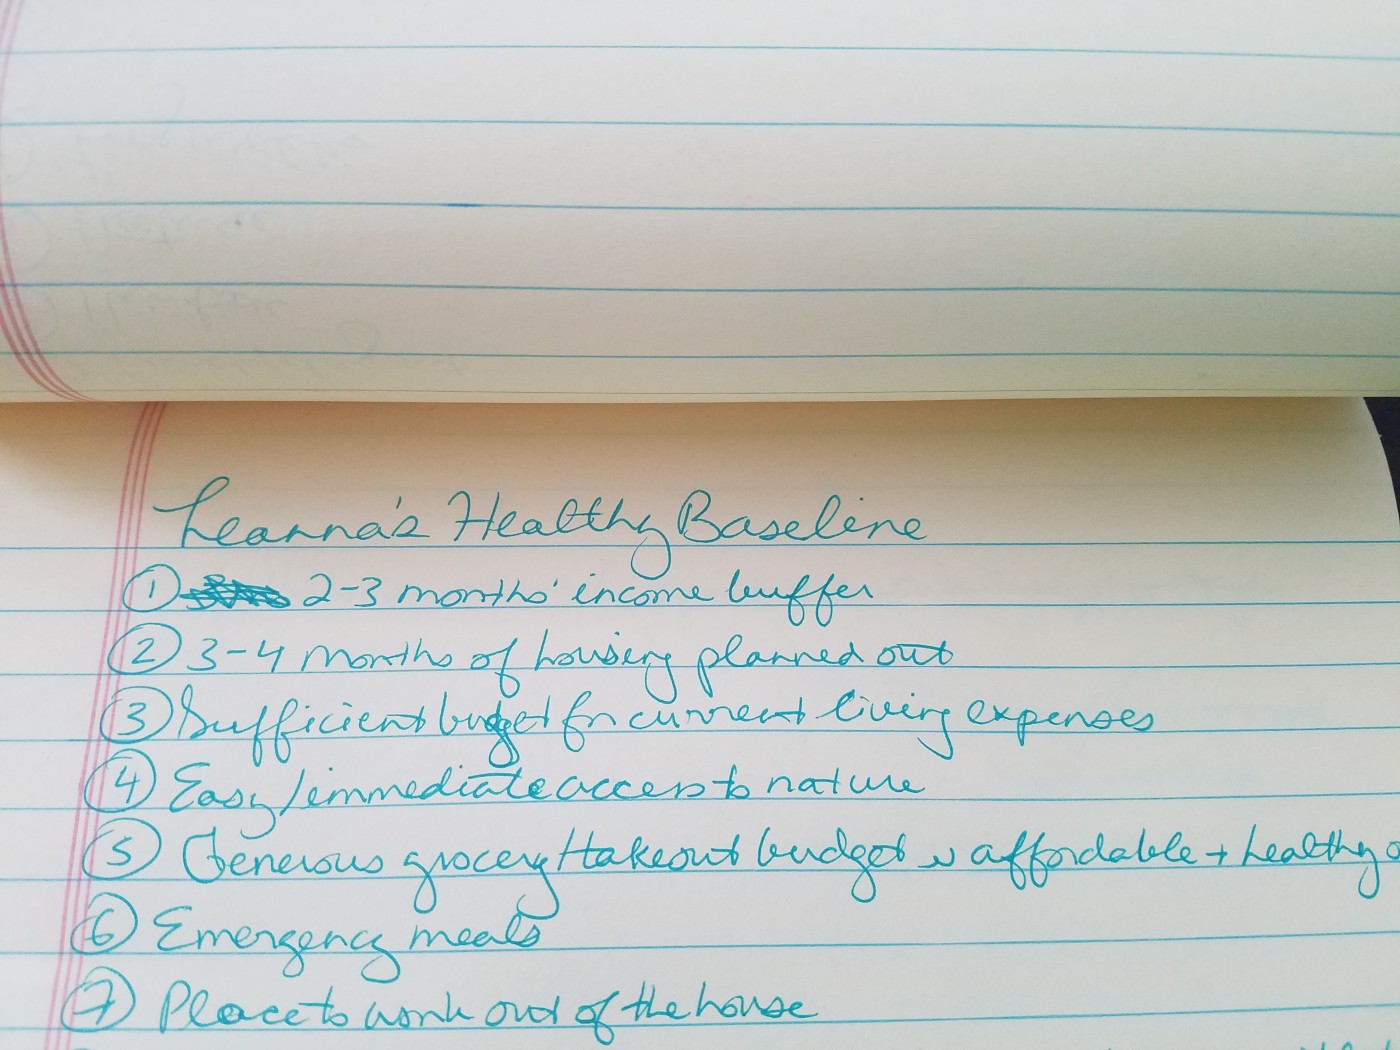 A list Leanna keeps of her "healthy baseline"